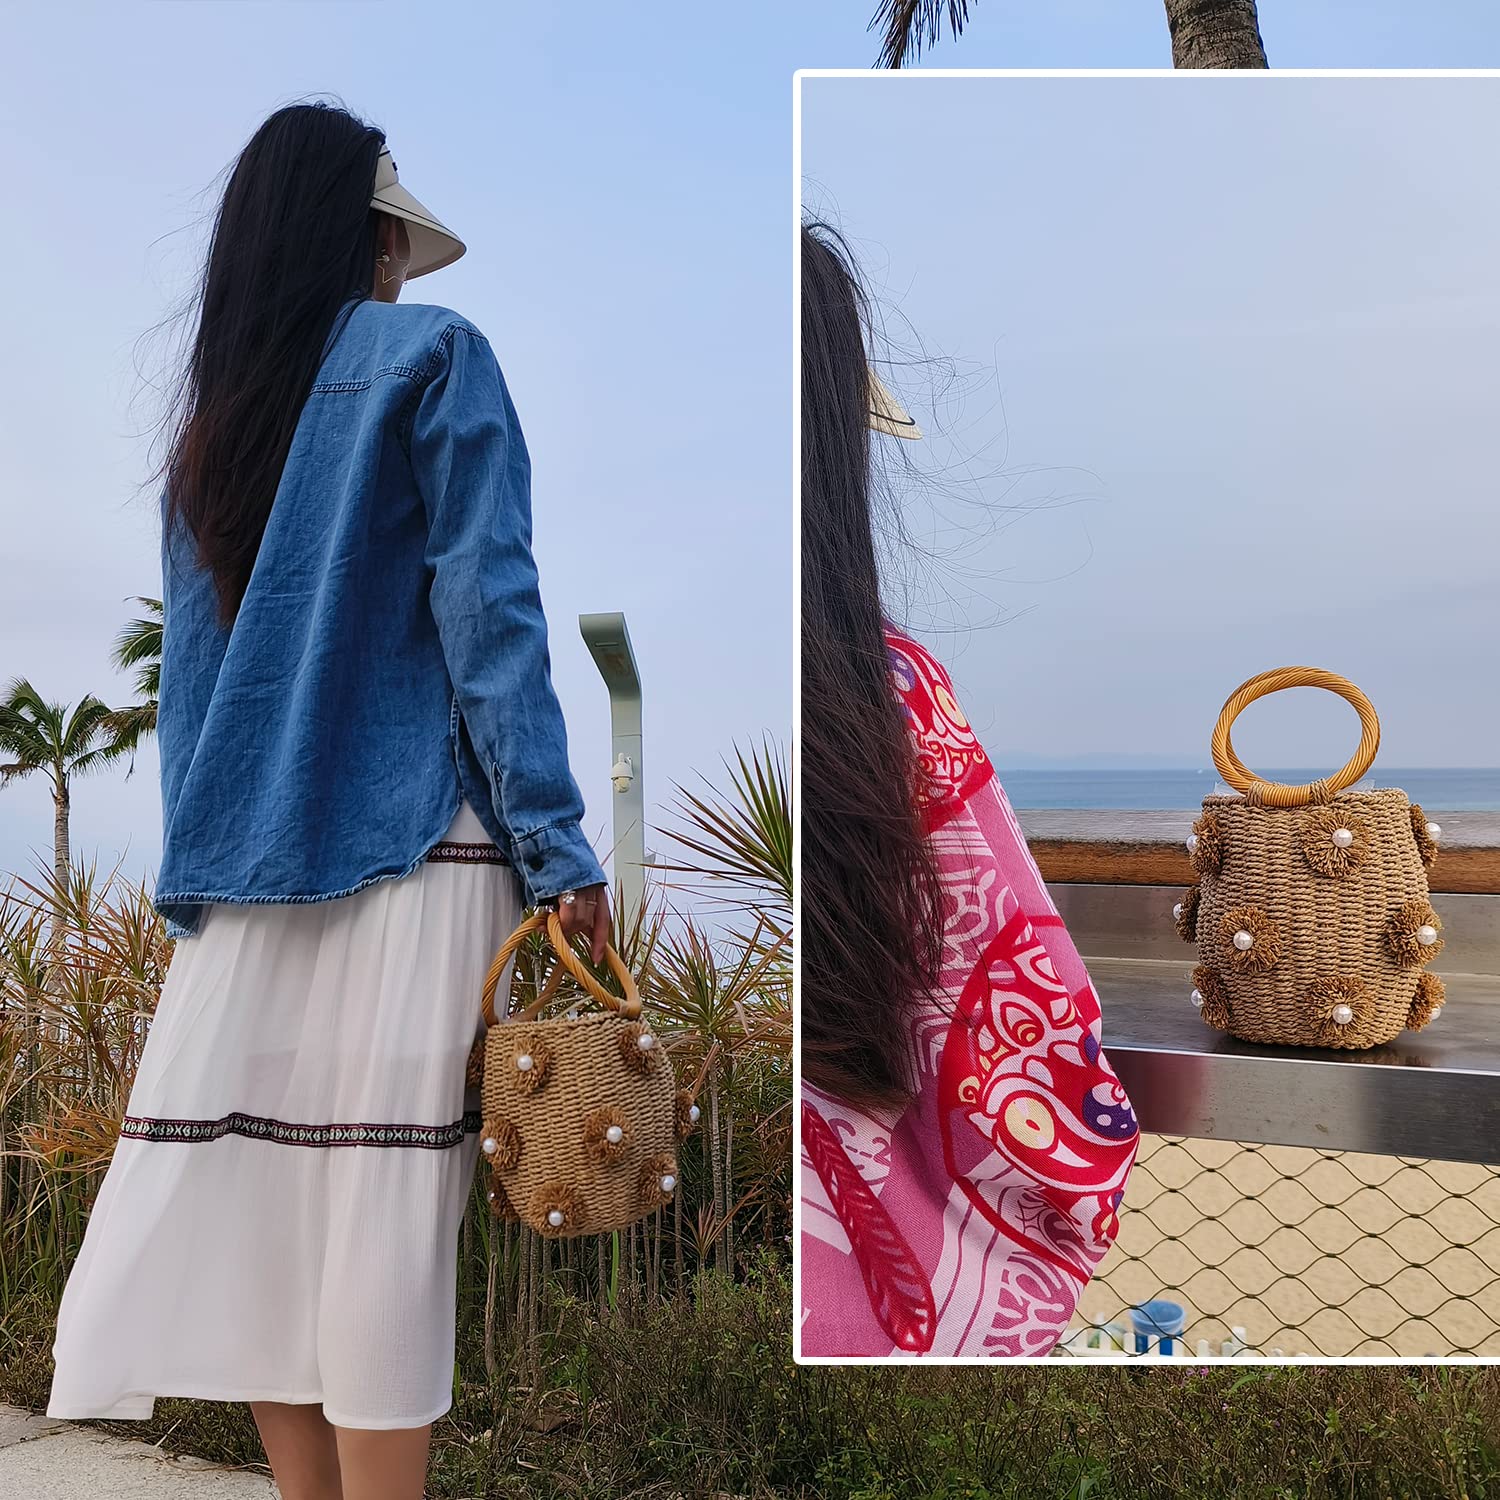 JBRUN Pearl Flower Straw Woven Tote Bag Summer Beach Rattan Handle Bucket Bag Straw Purses and Handbags for Women